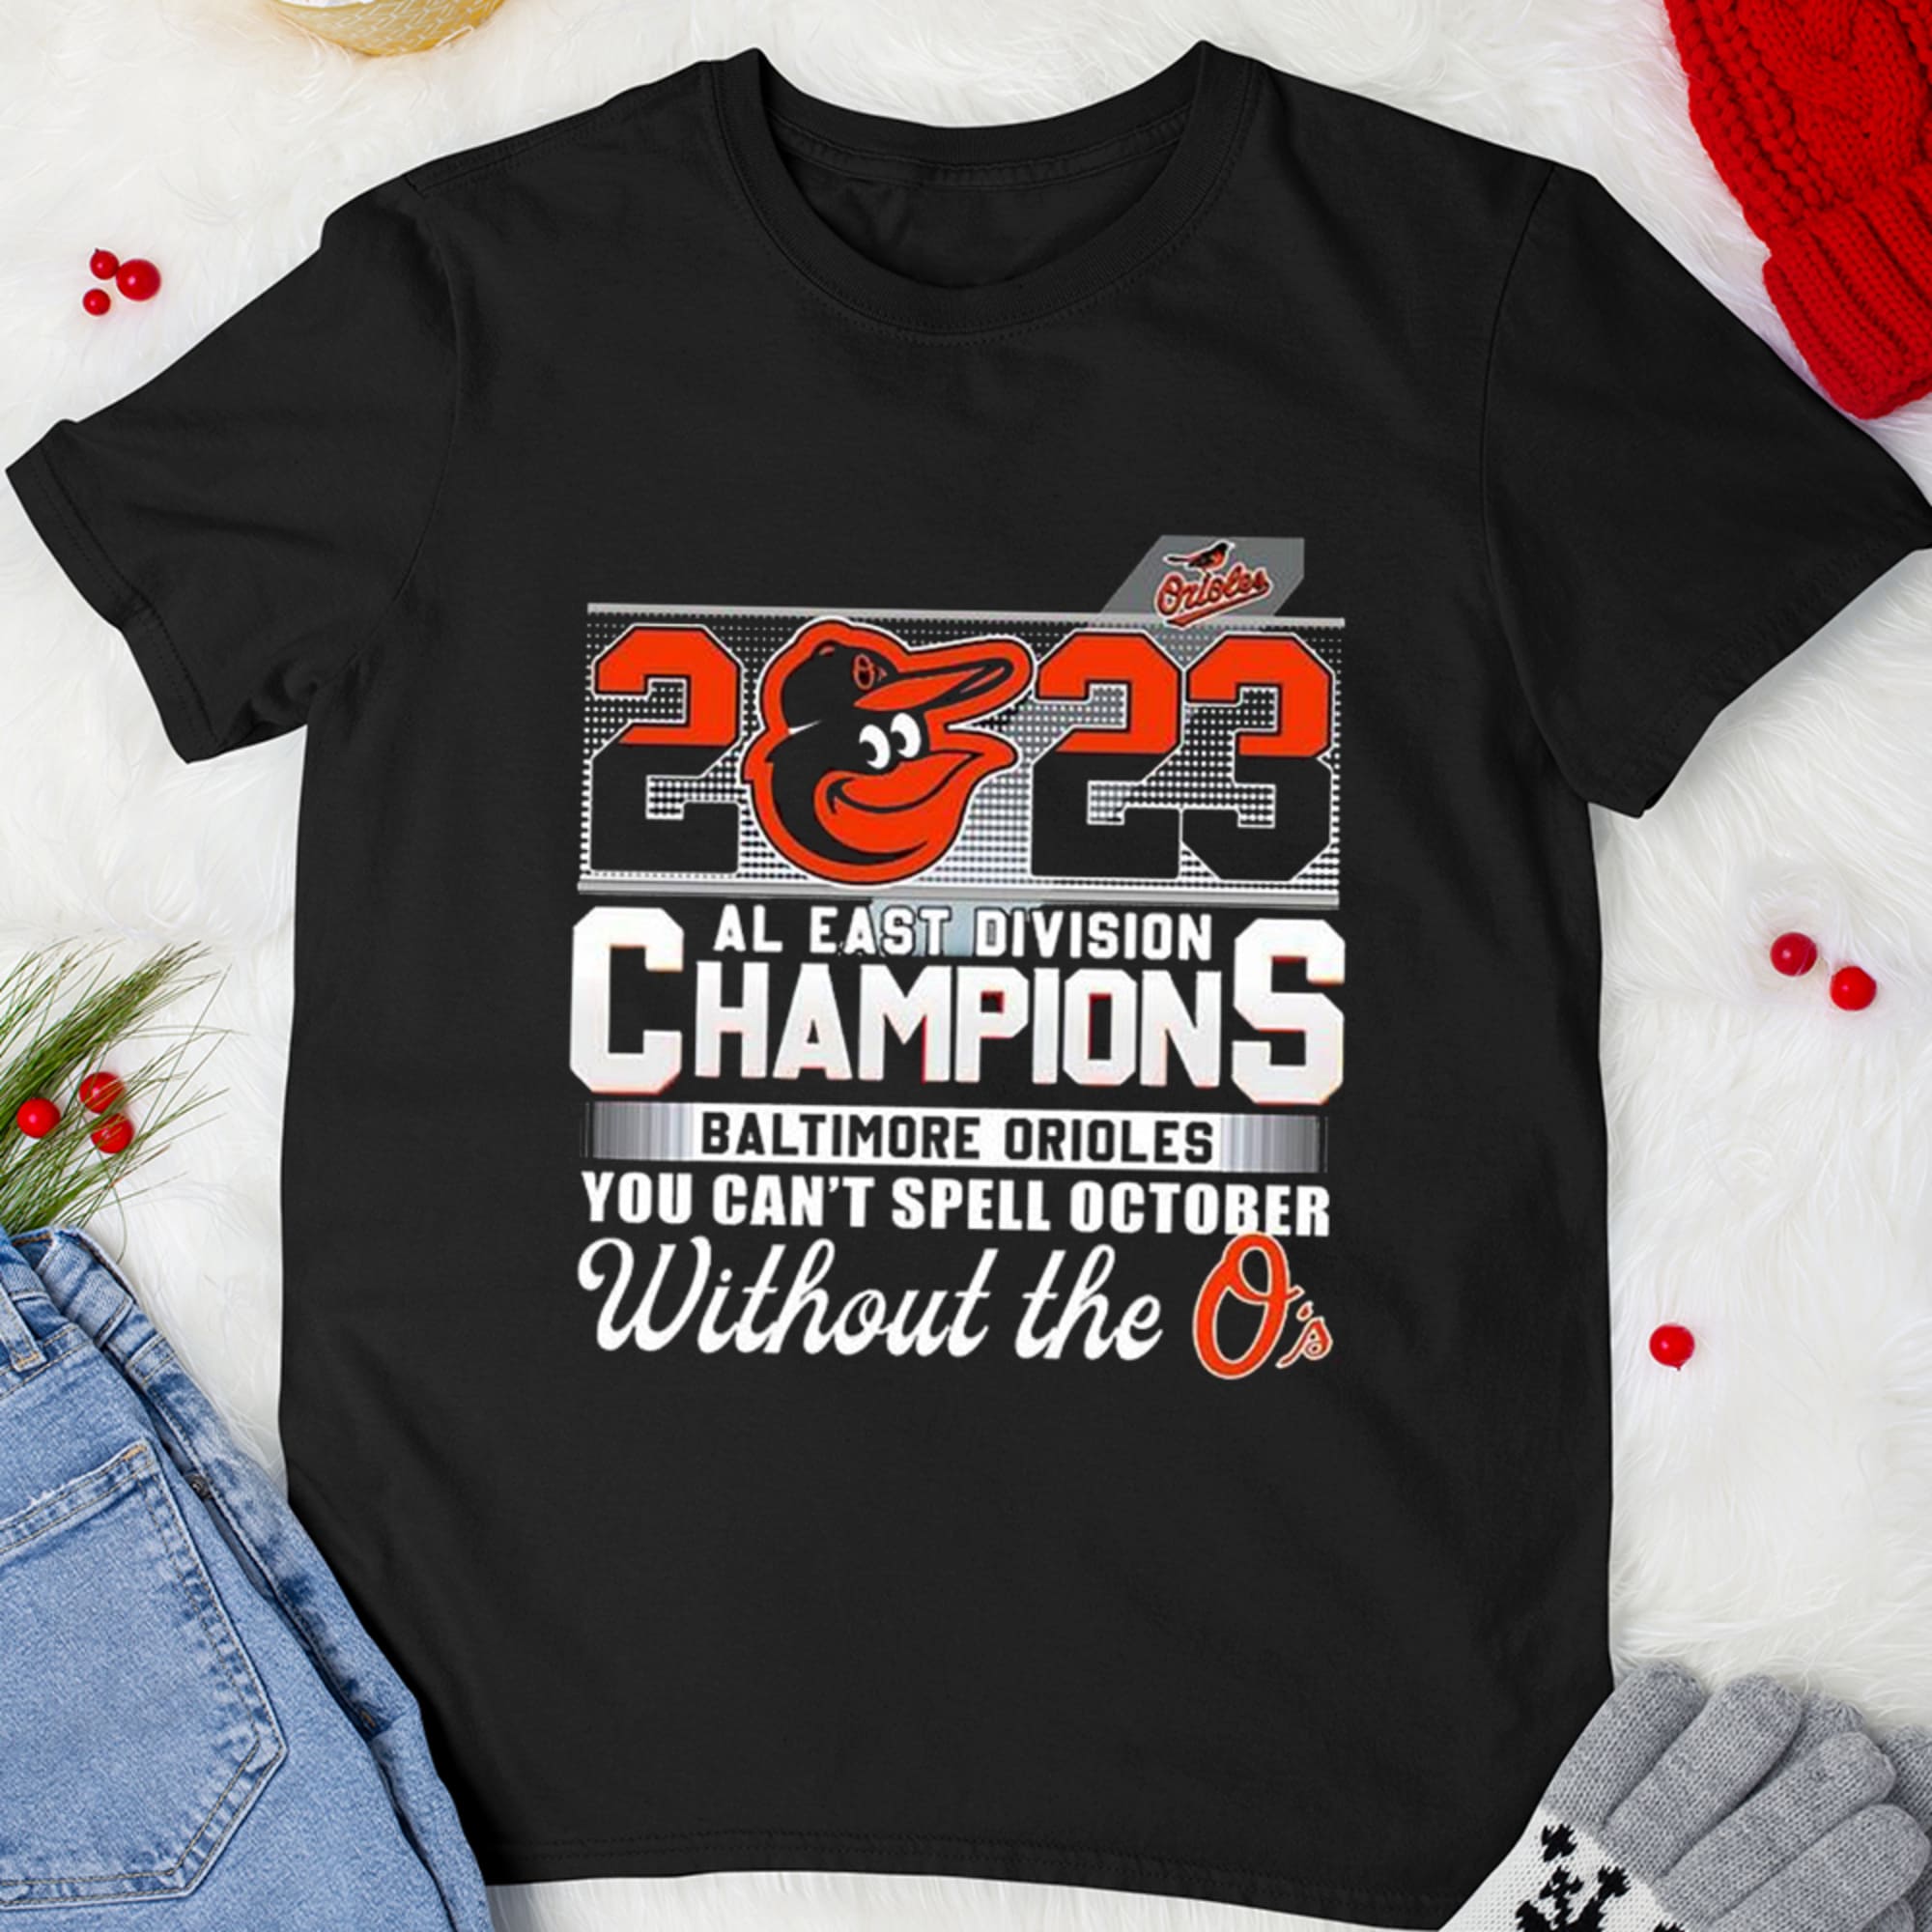 Nike Men's 2023 Division Champions Baltimore Orioles T-Shirt